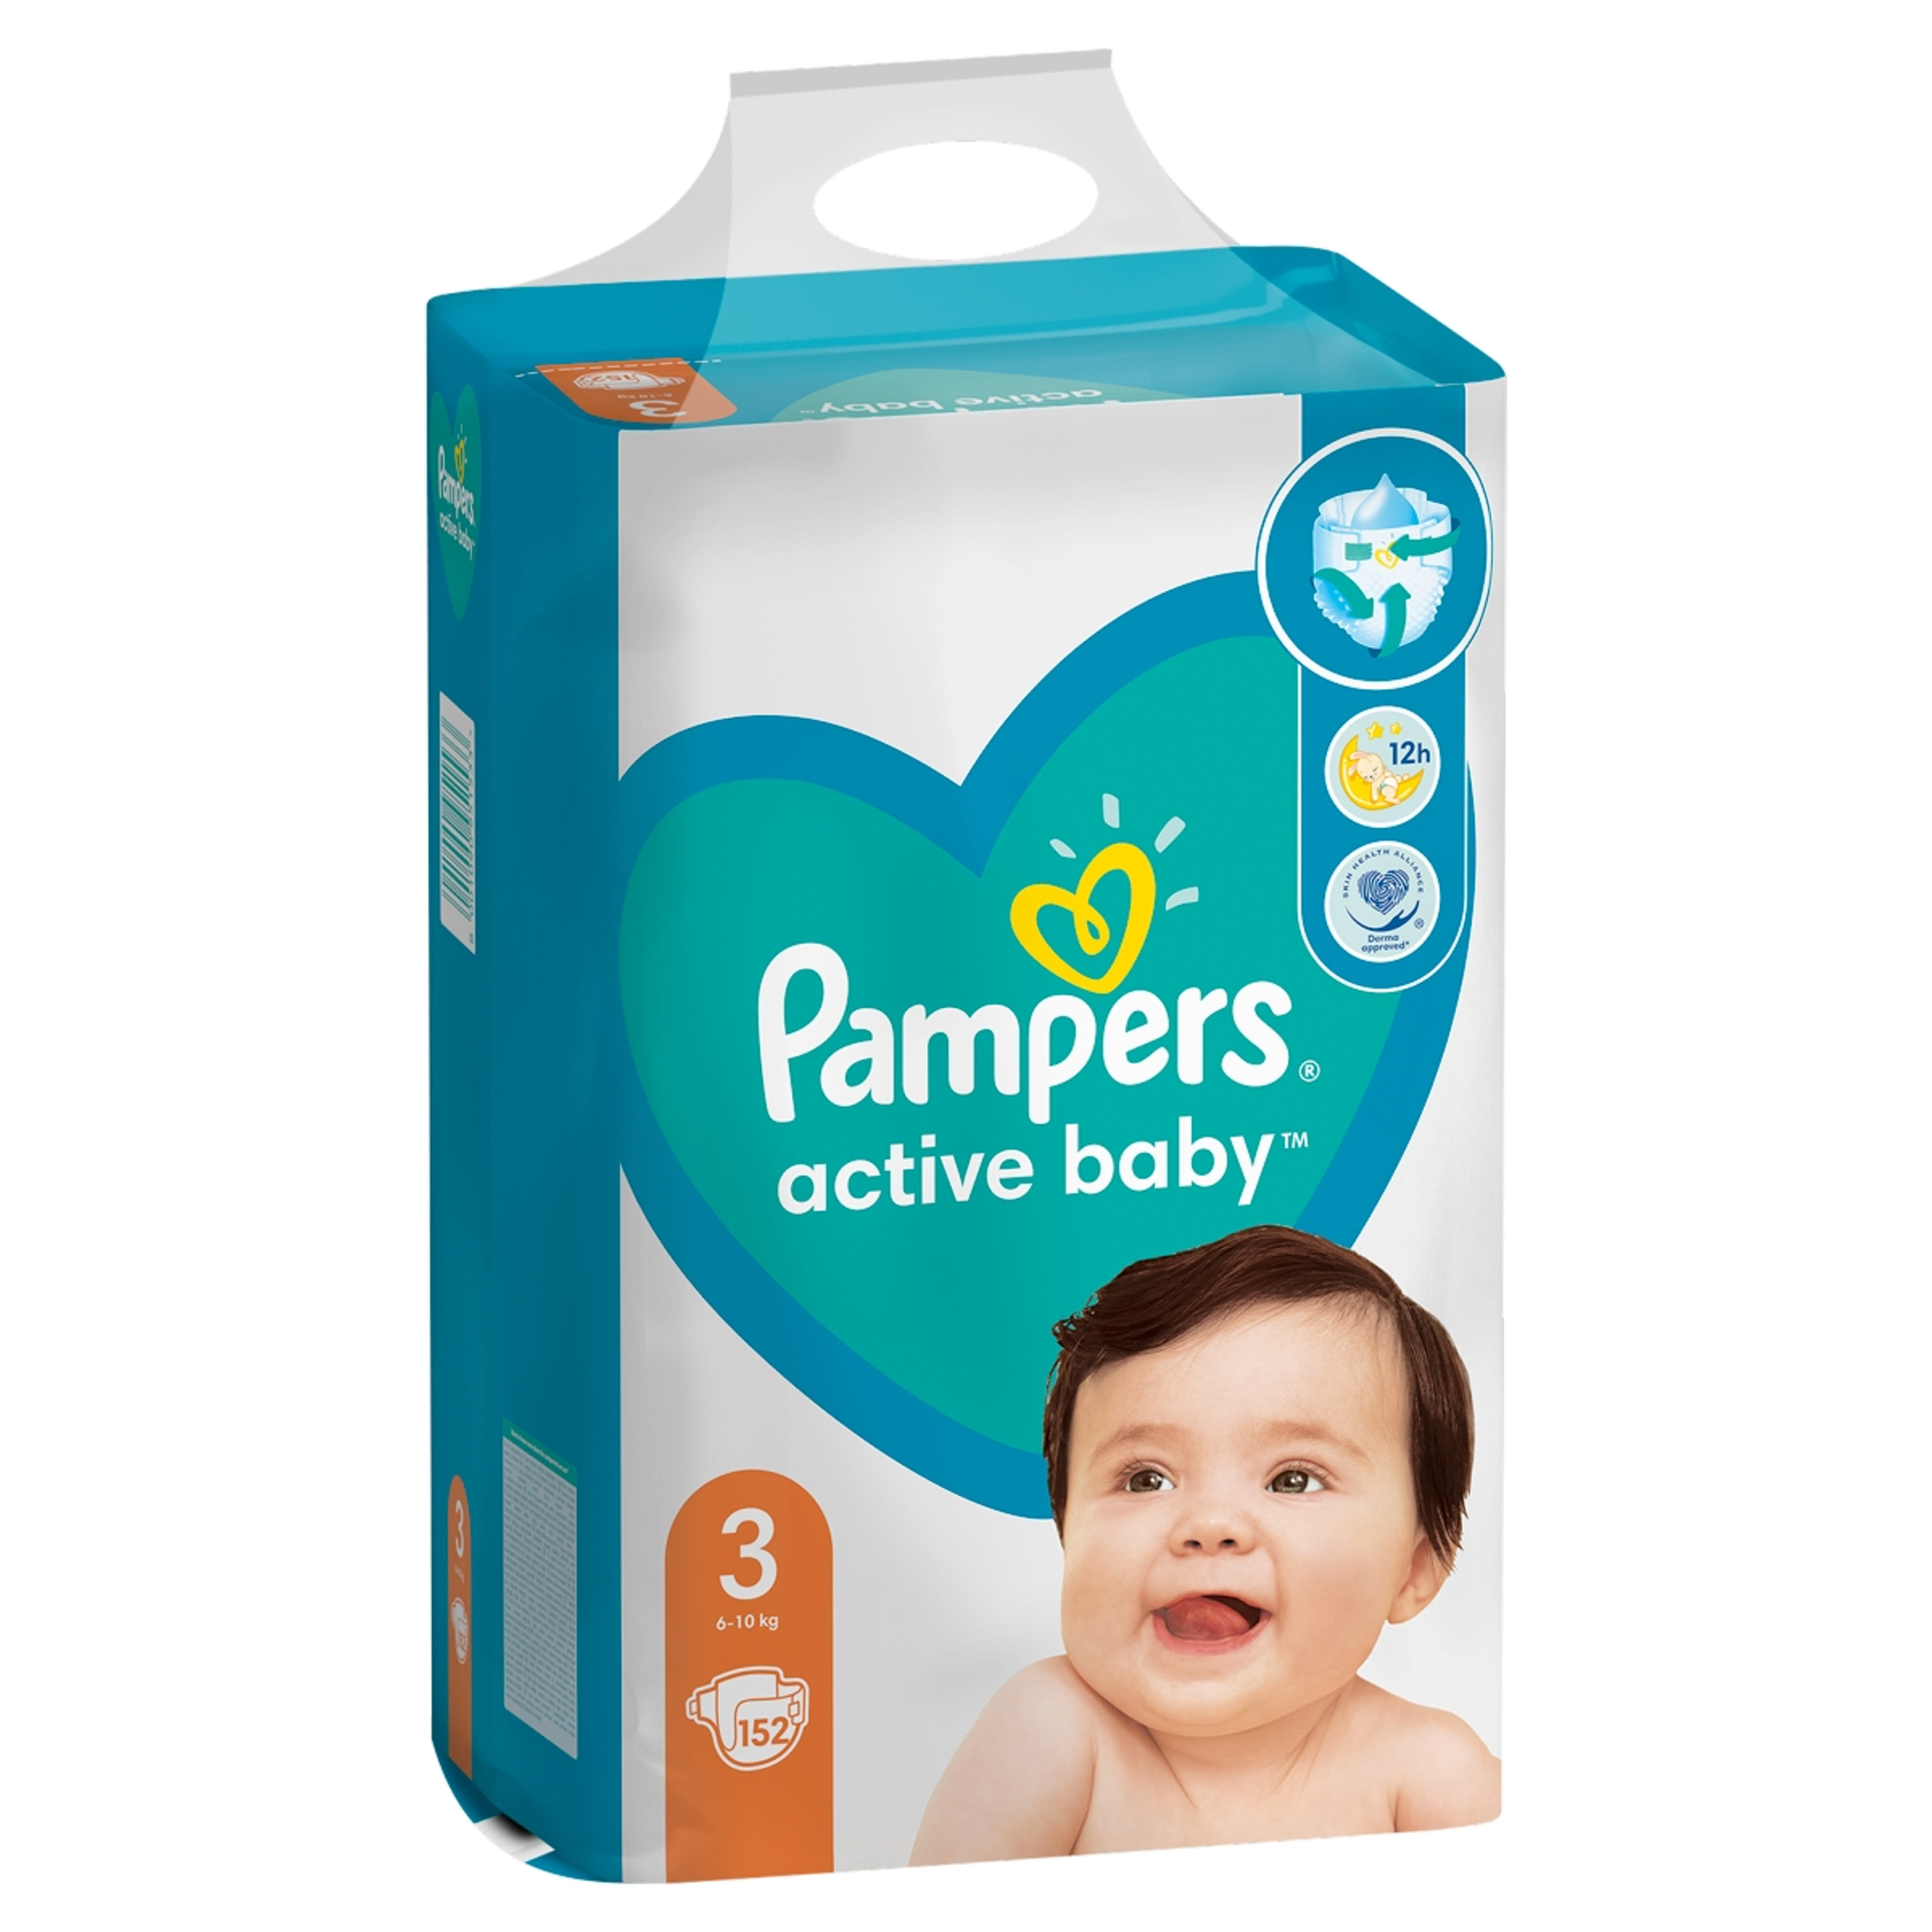 Pampers active baby mega pack+ 3-as 6-10kg - 152 db-2